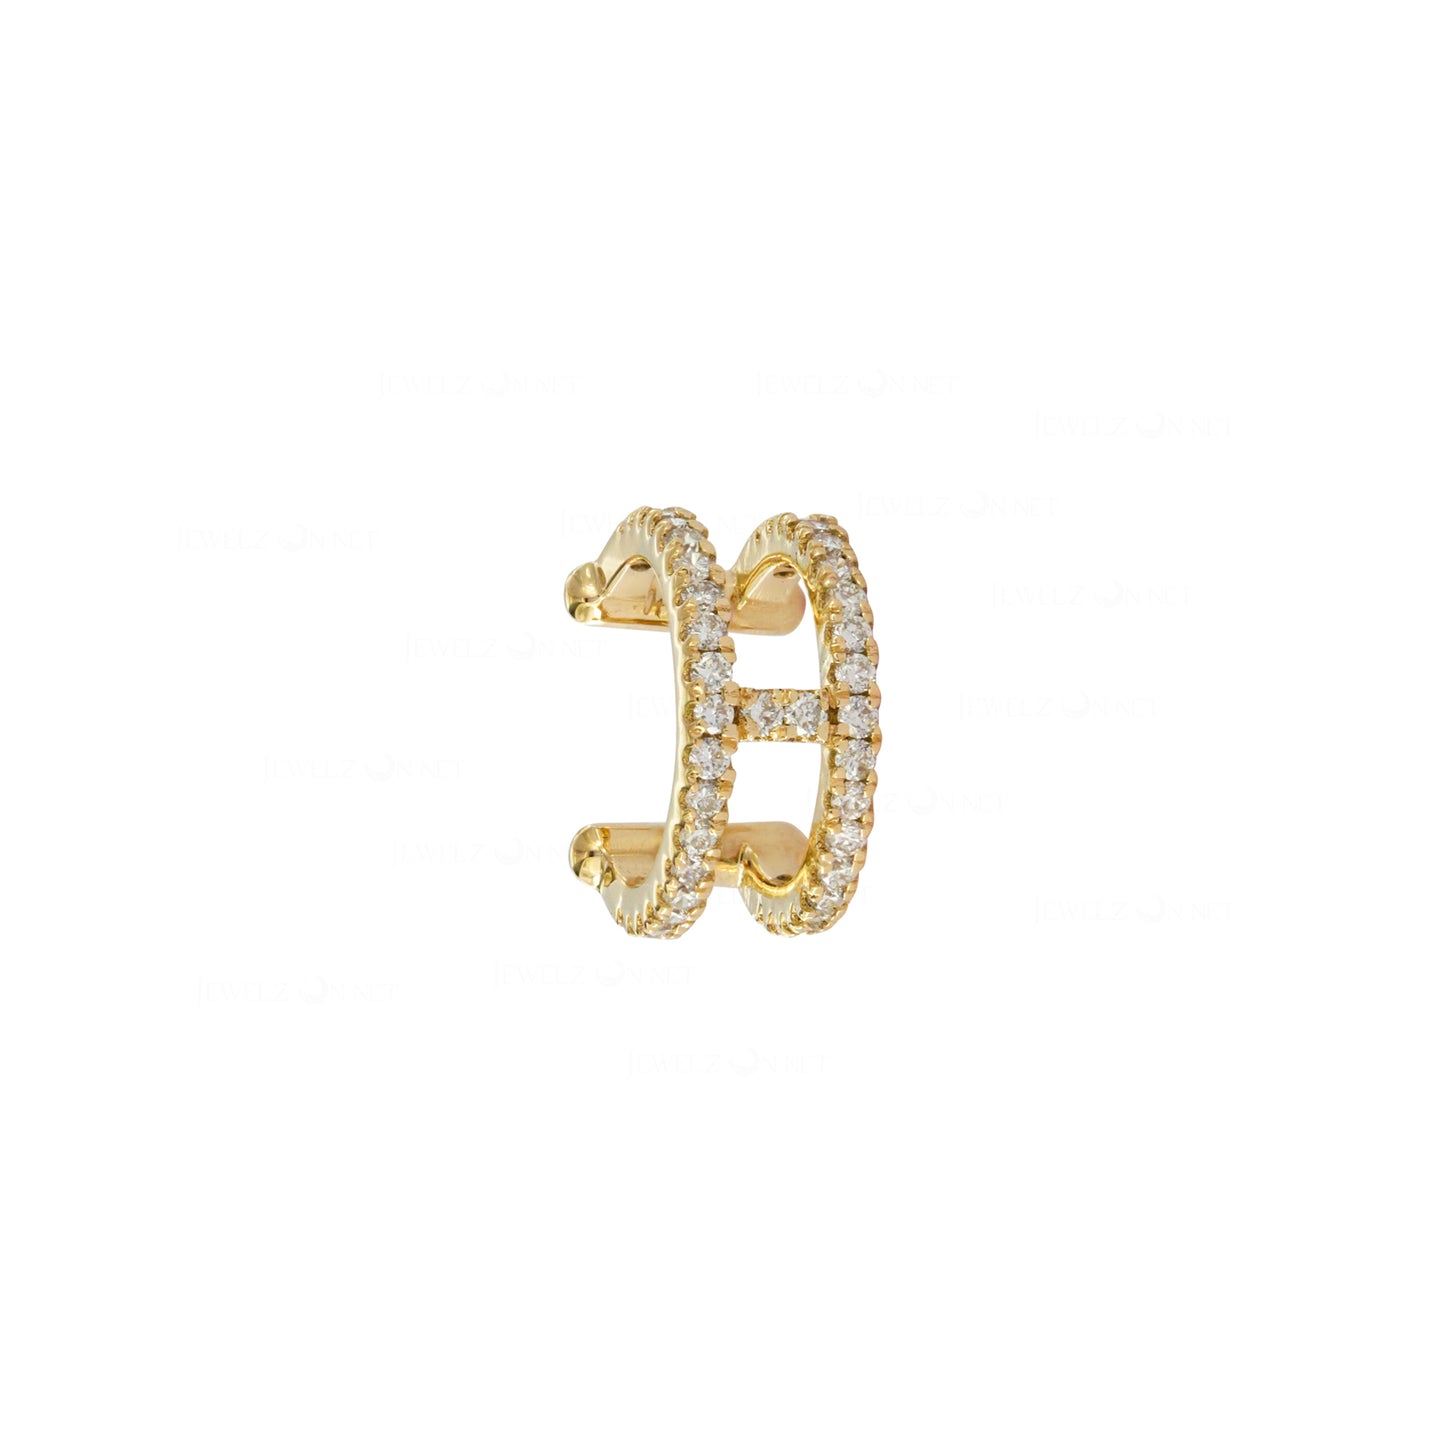 Genuine 0.20 Ct. Diamond Ear Cuff Earrings Solid 14k Yellow Gold Jewelry (1 Pc)